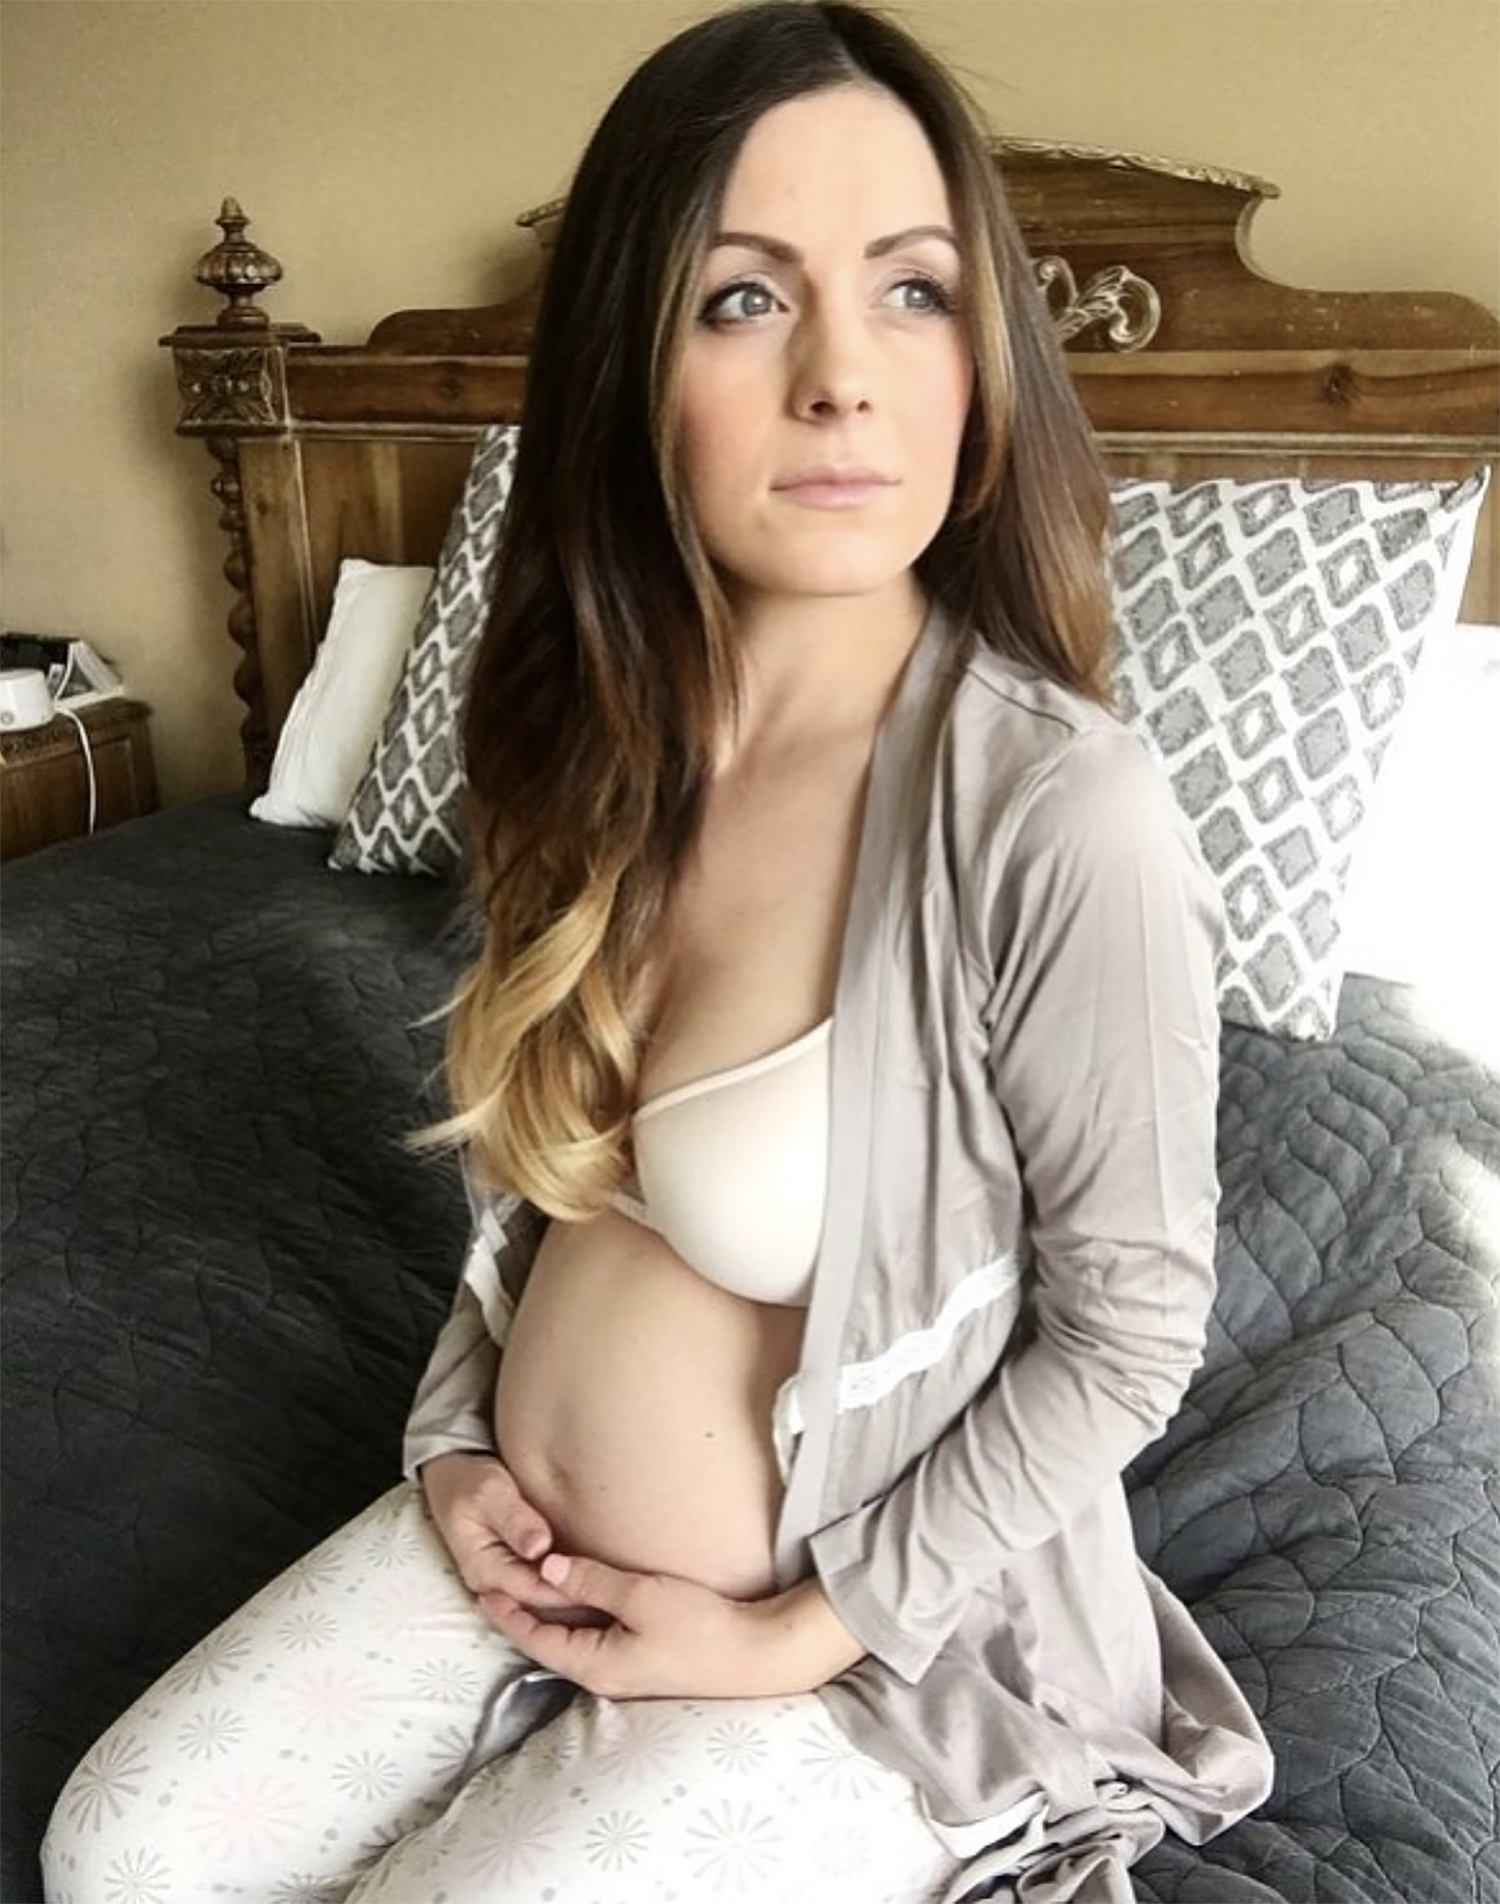 Pregnant Famous Porn Stars - pregnant famous porn stars | FORSAMPLESEX.COM